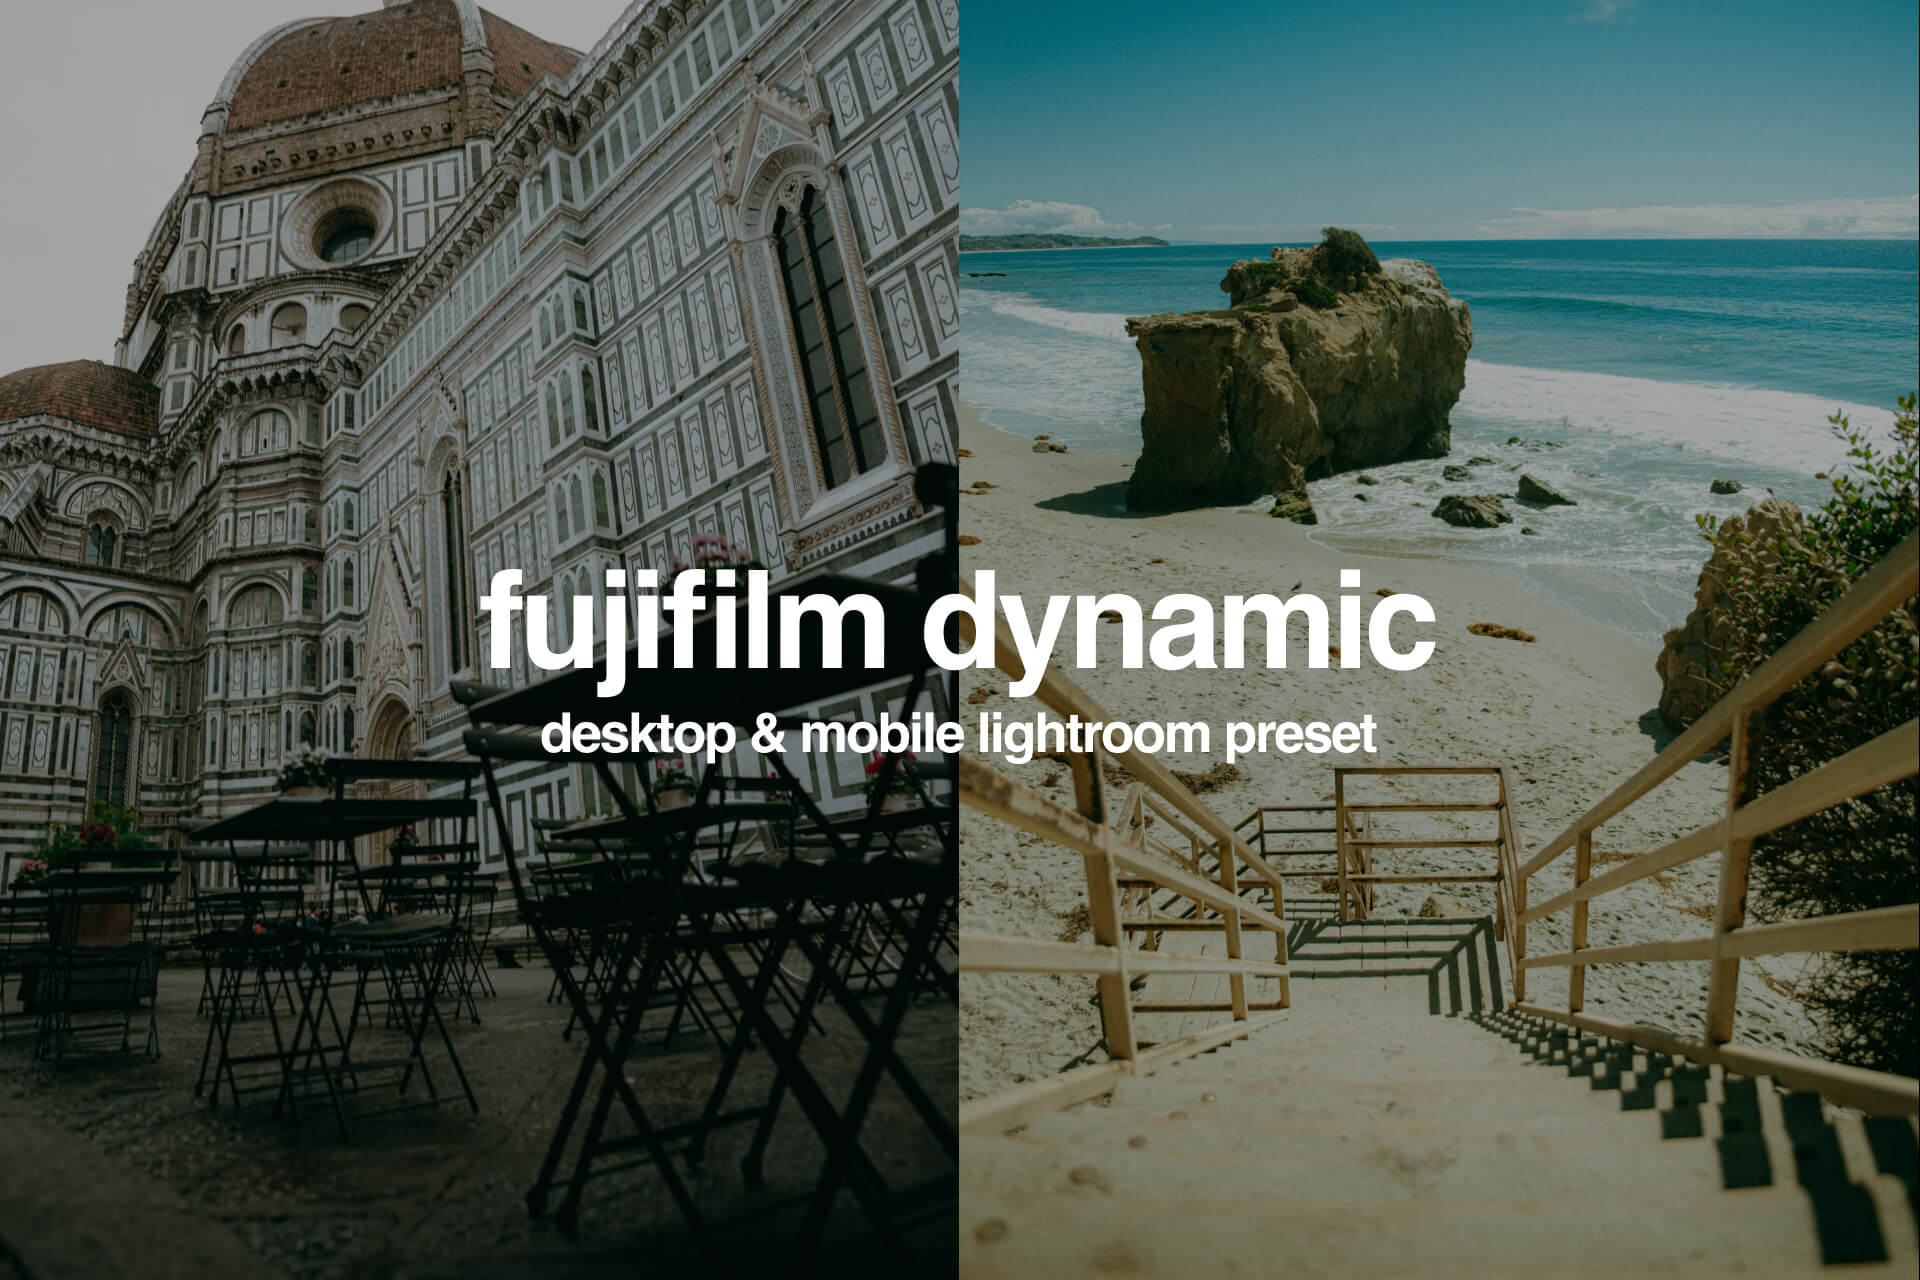 Free Fujifilm Dynamic Preset